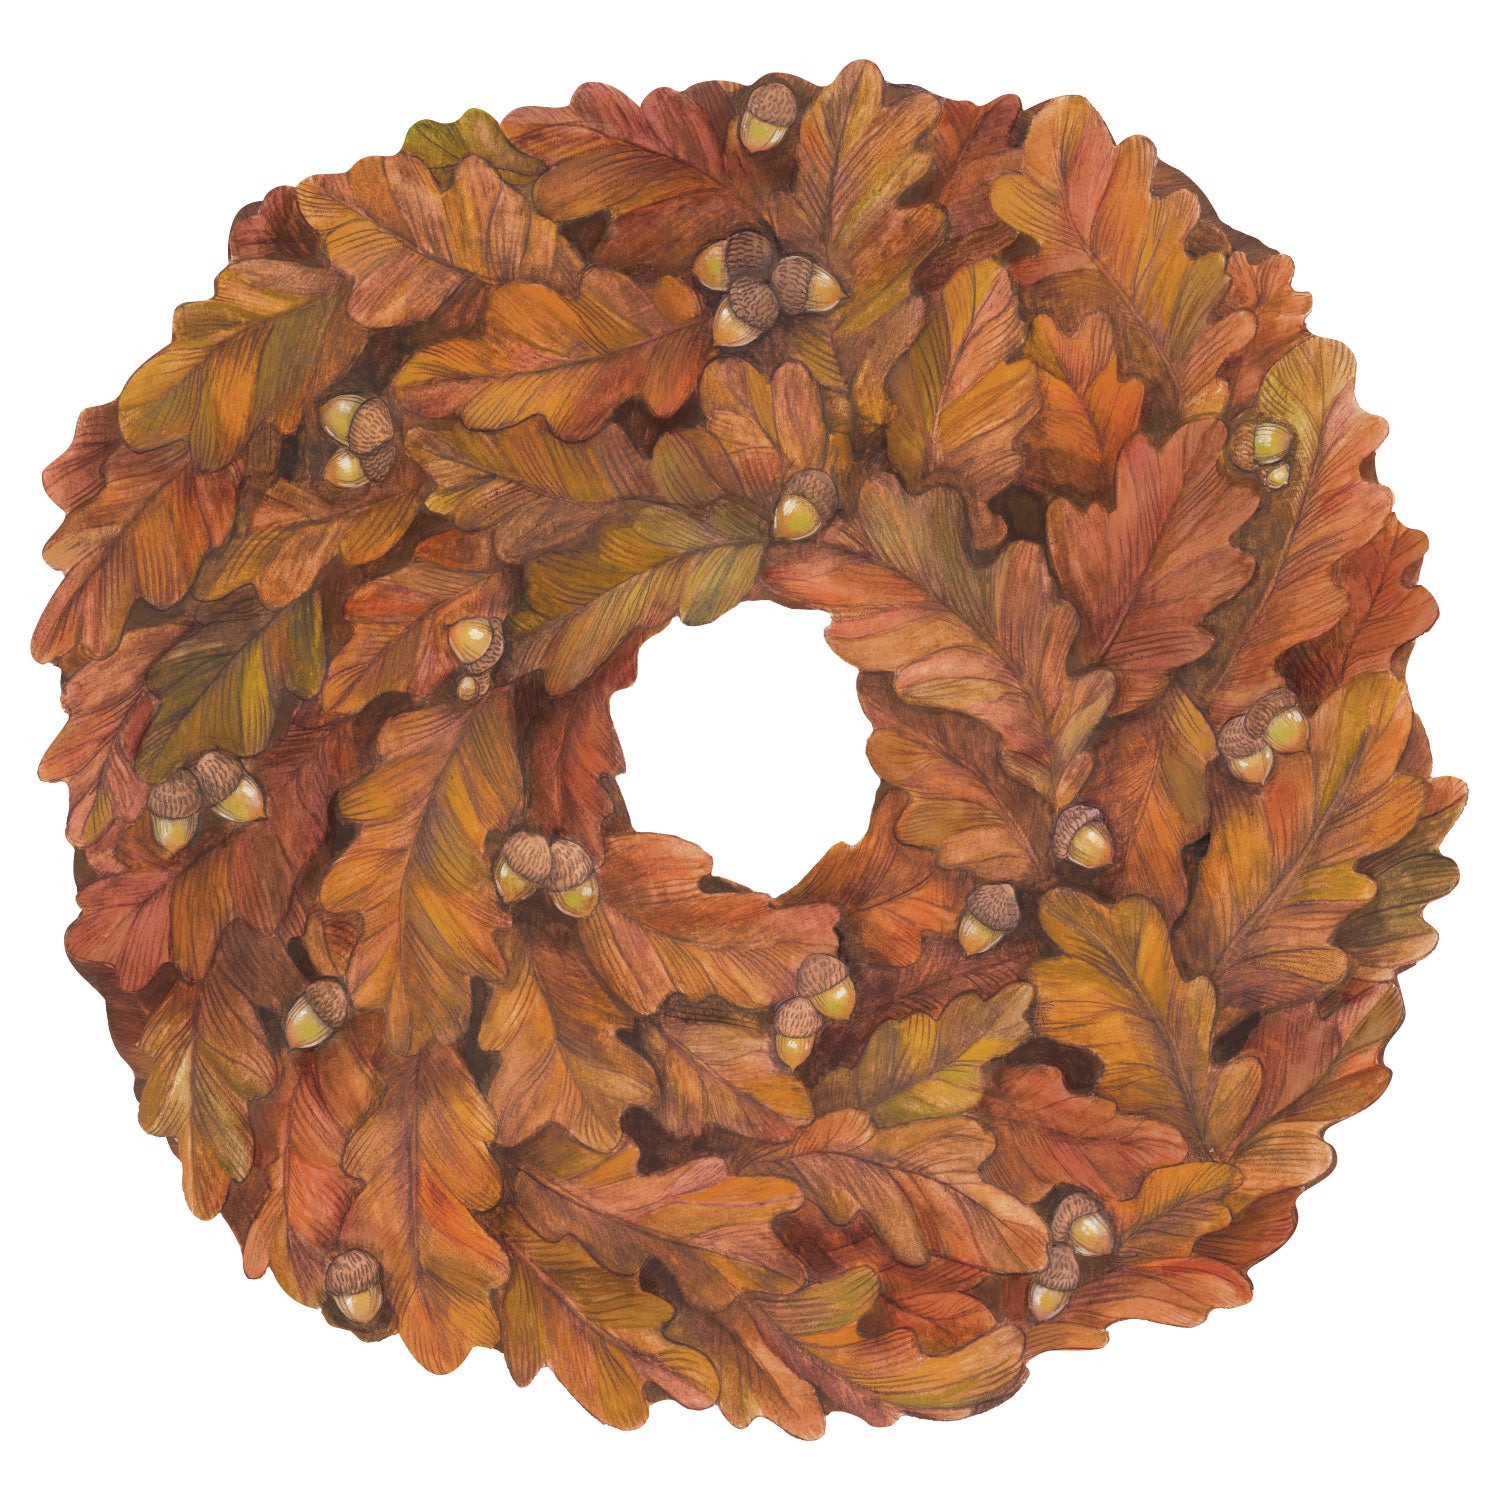 Die-cut Autumn Wreath Placemat